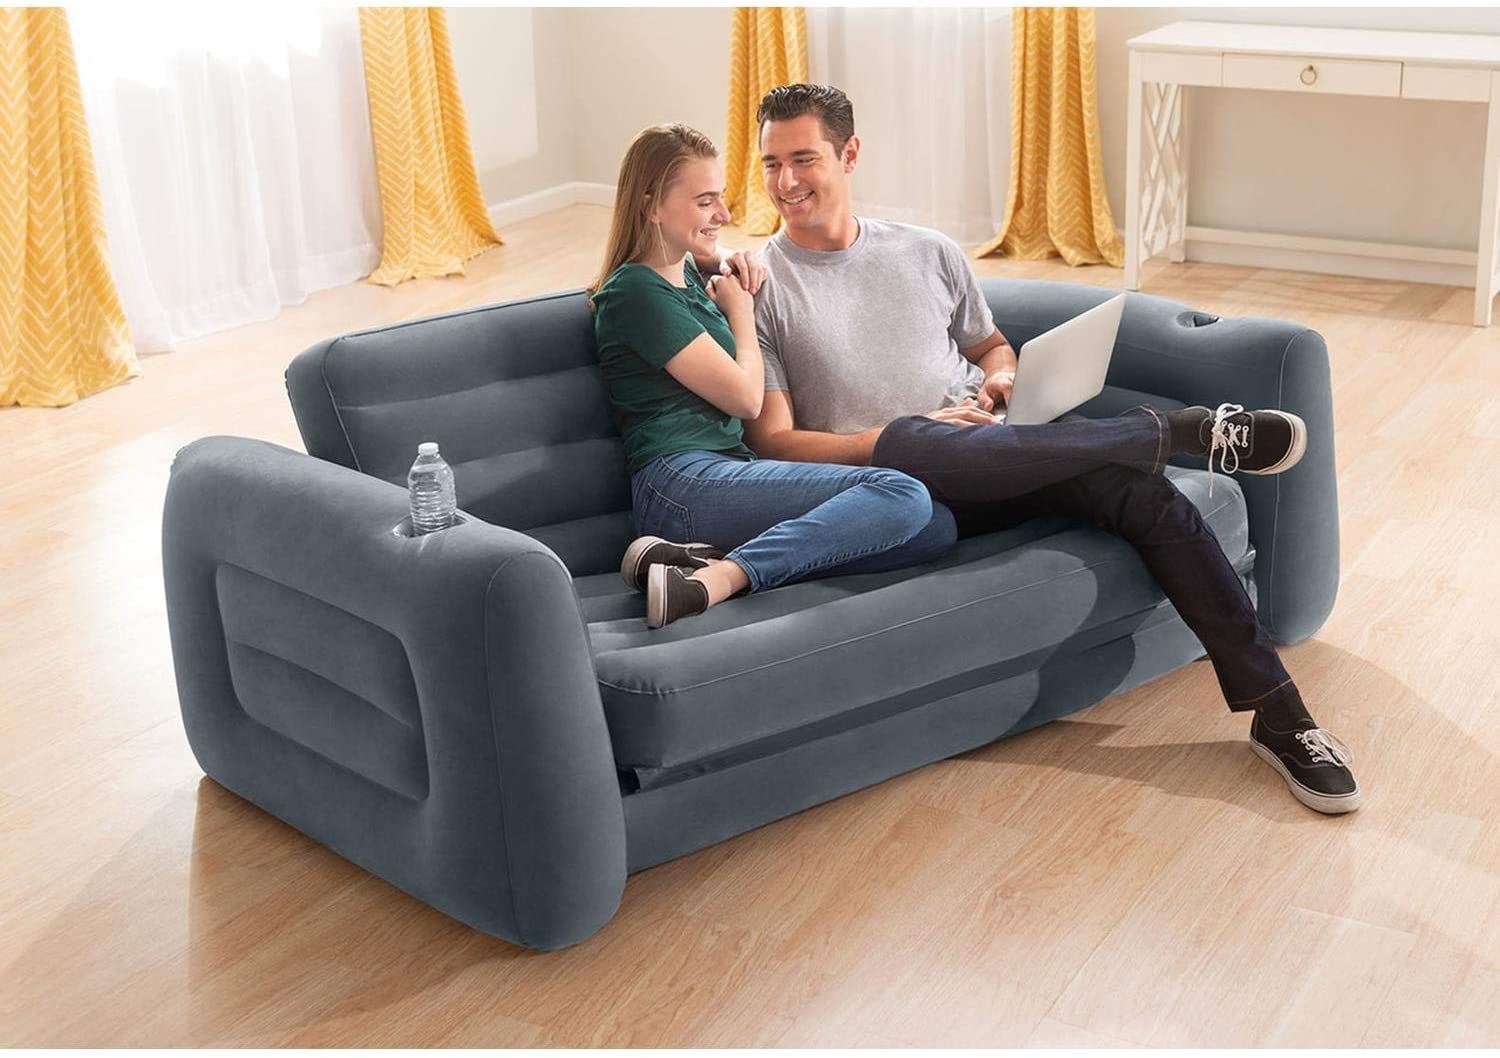 Intex-opblaasbare-en-uitklapbare-stoel-bed-117x224x66cm